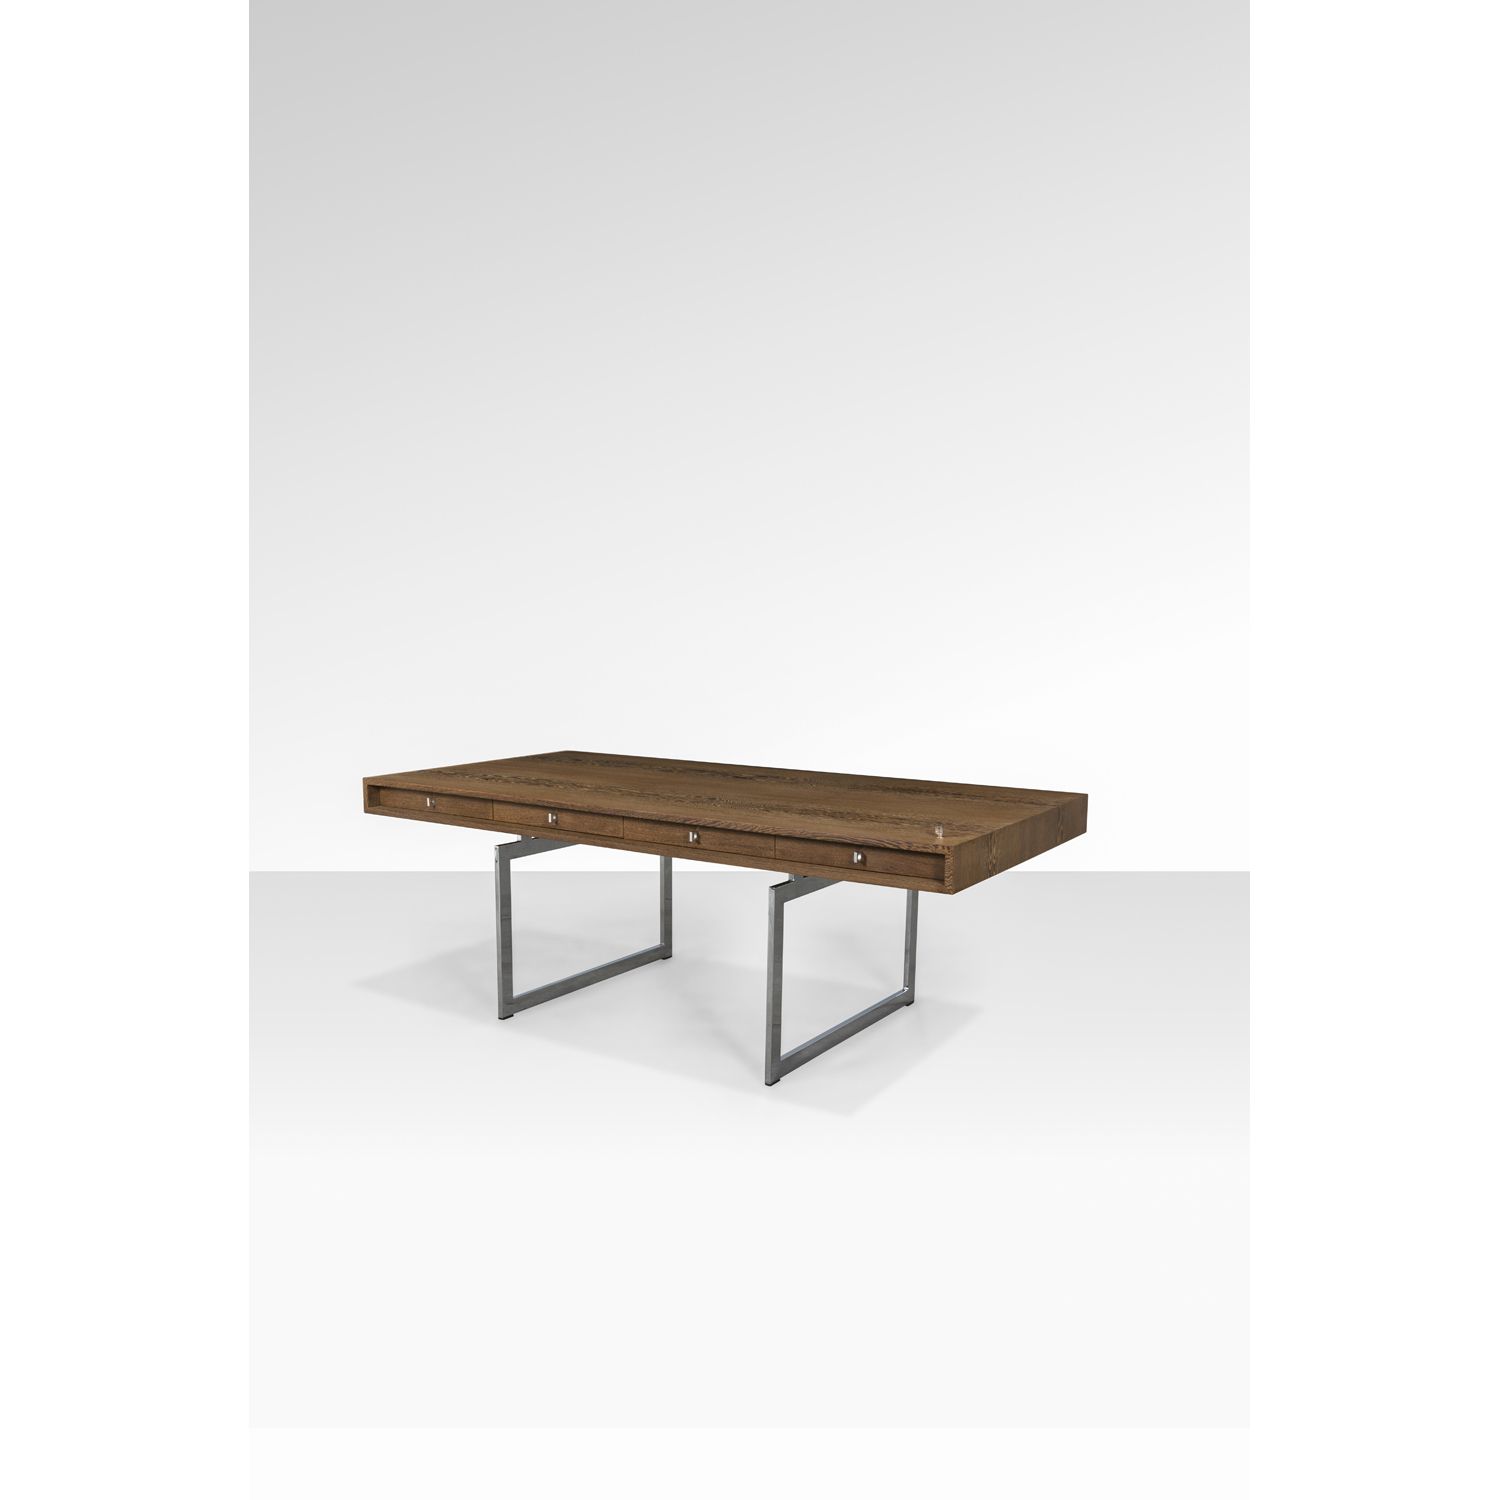 Null 博迪尔-克雅尔（生于1932年）

型号：901

办公桌

镀铬金属，木质和文革饰面

E.Pederson & Sons版

设计于1959年

&hellip;